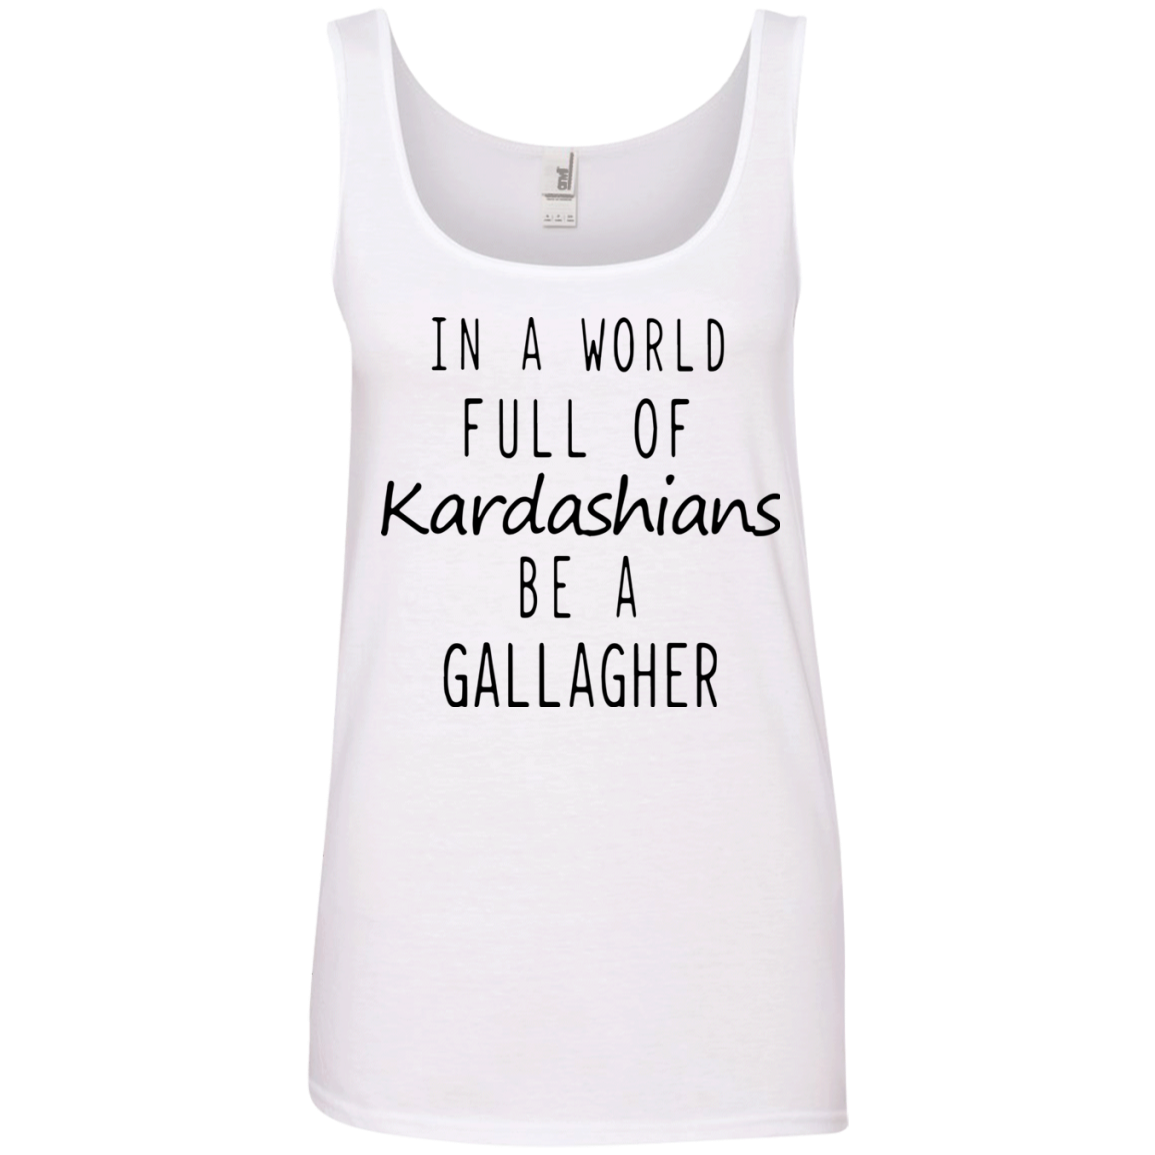 Emmy Rossum: In a world full of Kardashians be a Gallagher shirt, tank top